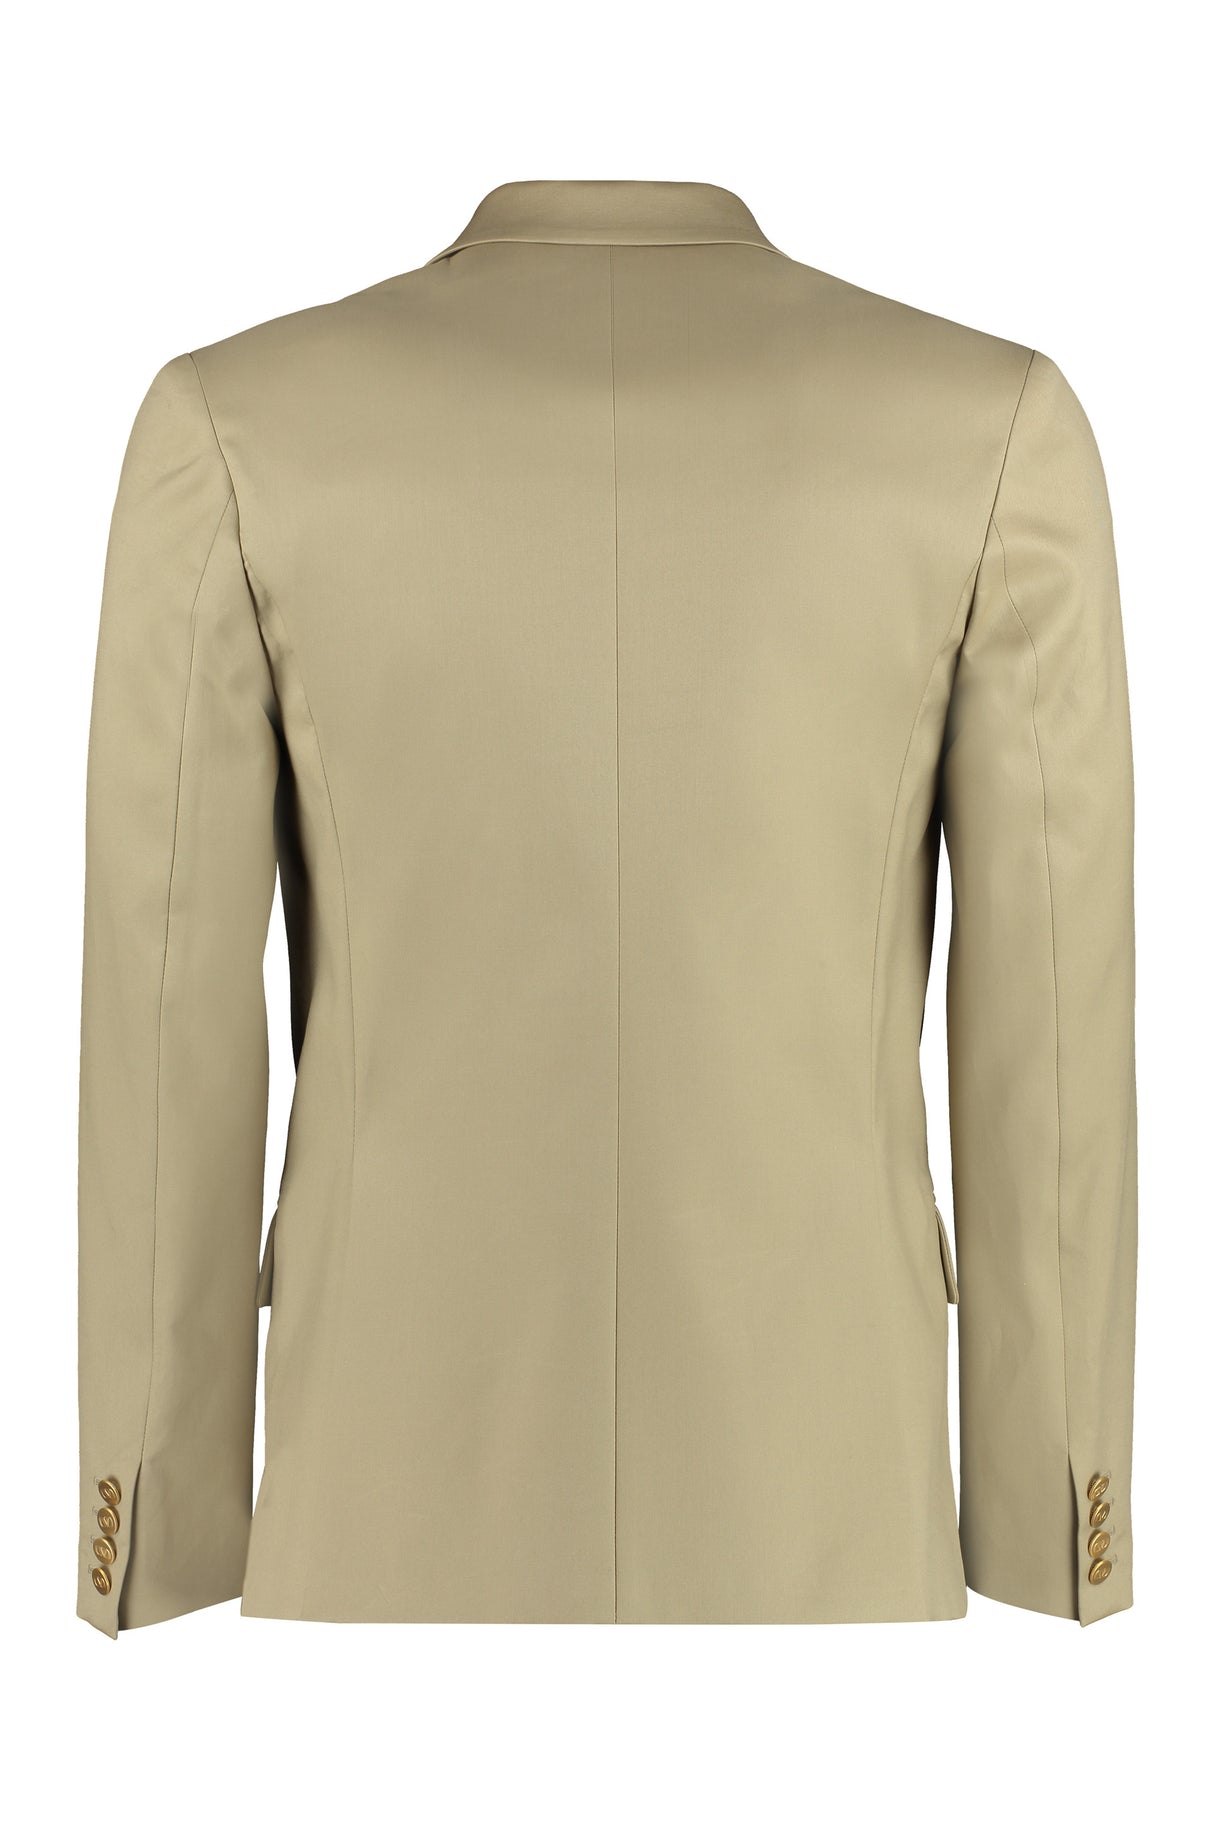 VALENTINO GARAVANI Sand-Colored Double-Breasted Cotton Jacket for Men